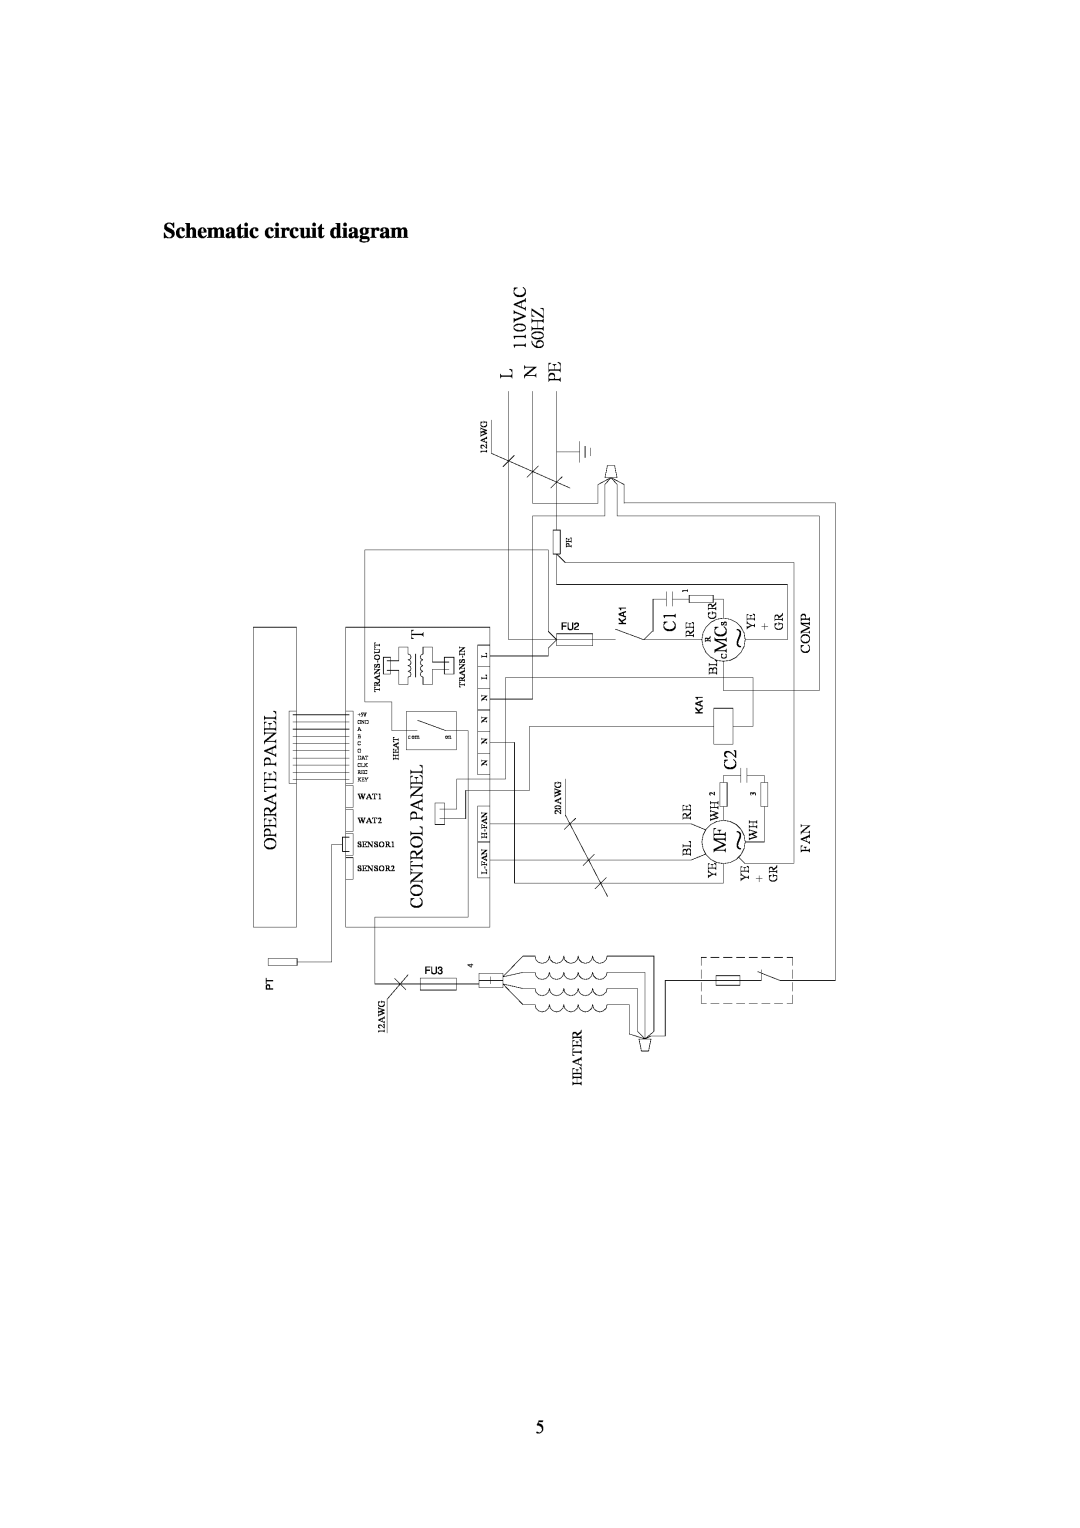 Soleus Air air-condition Schematic circuit, diagram, Operate Panel, Control Panel, L 110VAC N 60HZ PE, Heater, Fancomp 